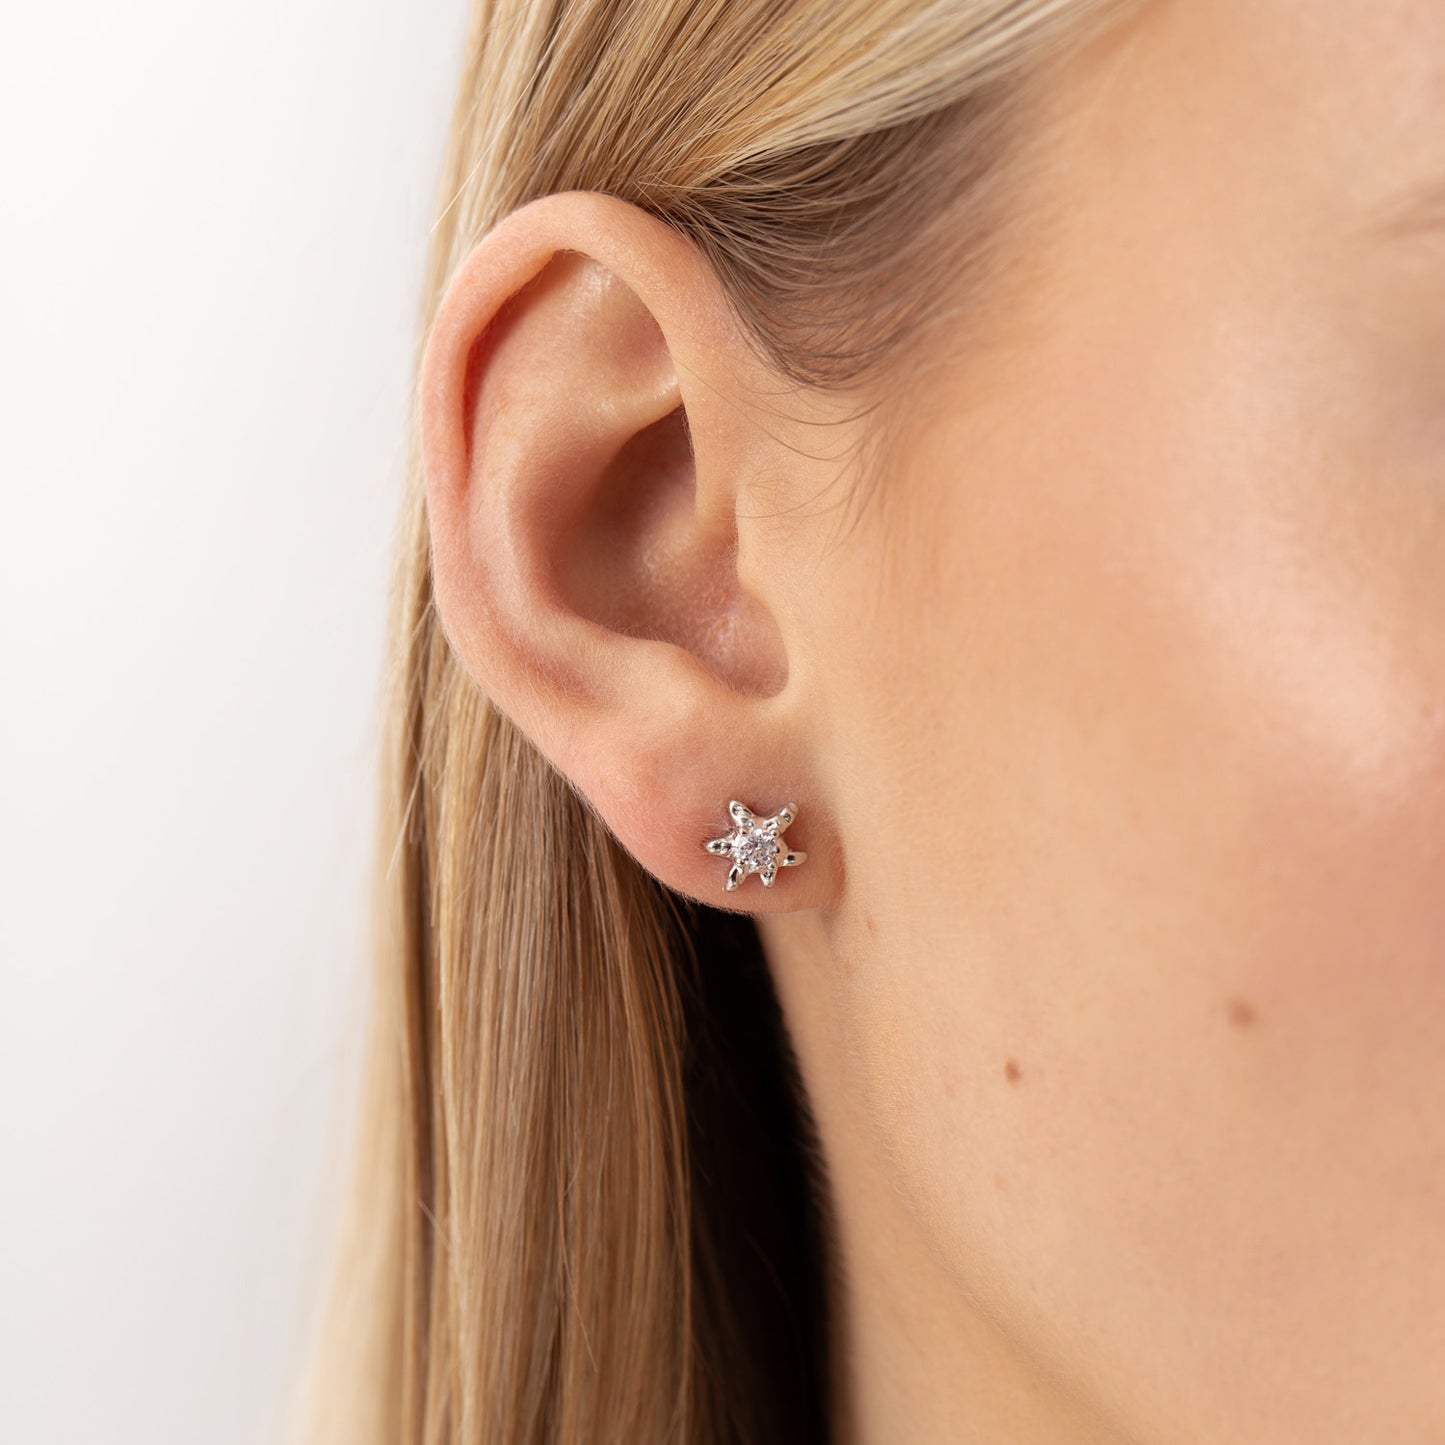 Supernova silver stud earrings